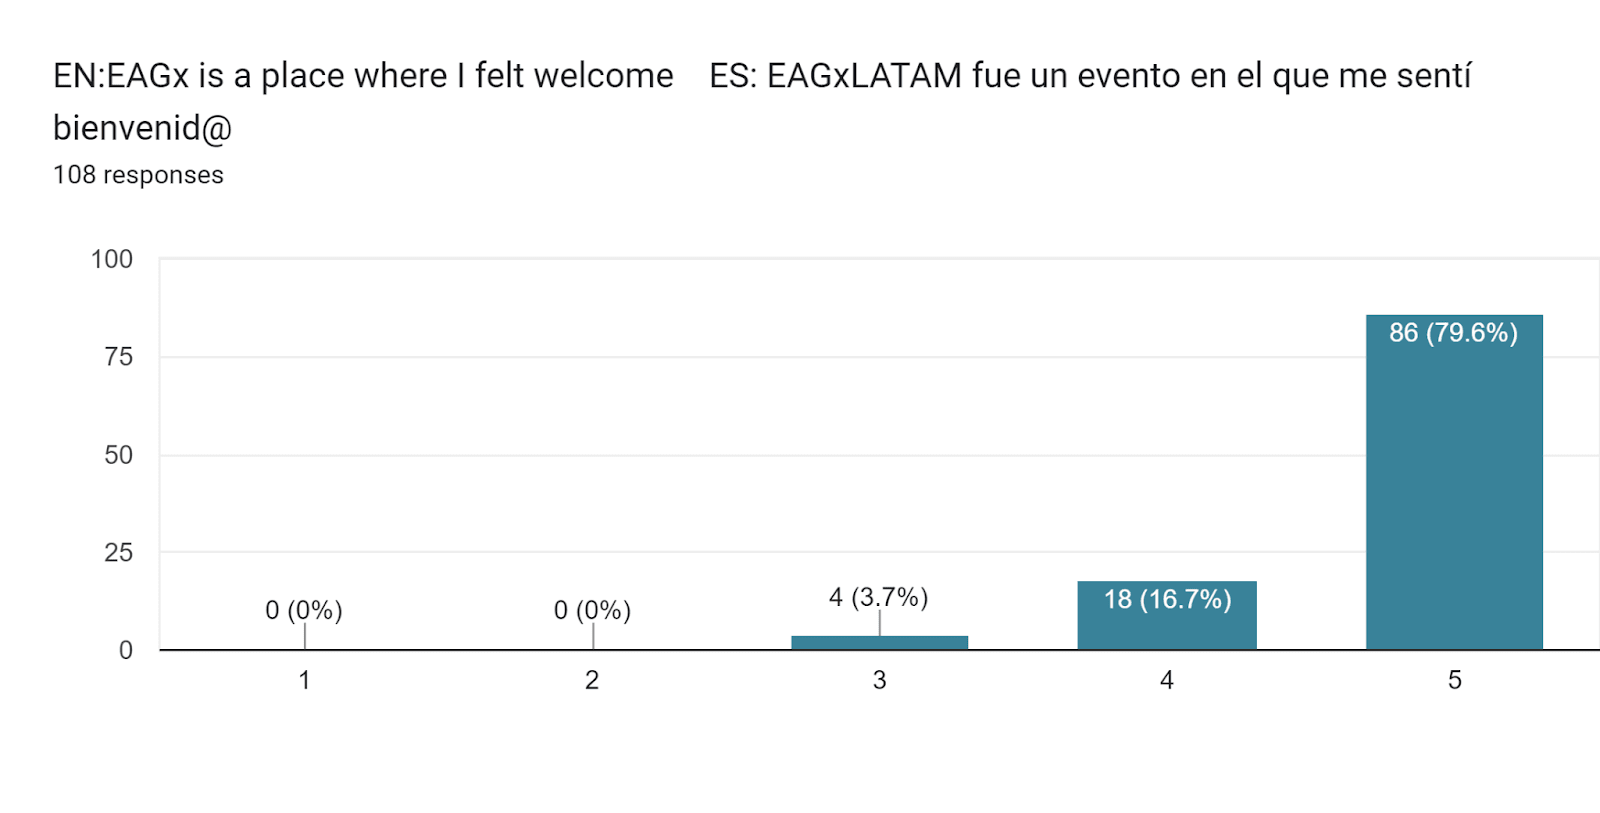 Forms response chart. Question title: EN:EAGx is a place where I felt welcome 


ES: EAGxLATAM fue un evento en el que me sentí bienvenid@
. Number of responses: 108 responses.